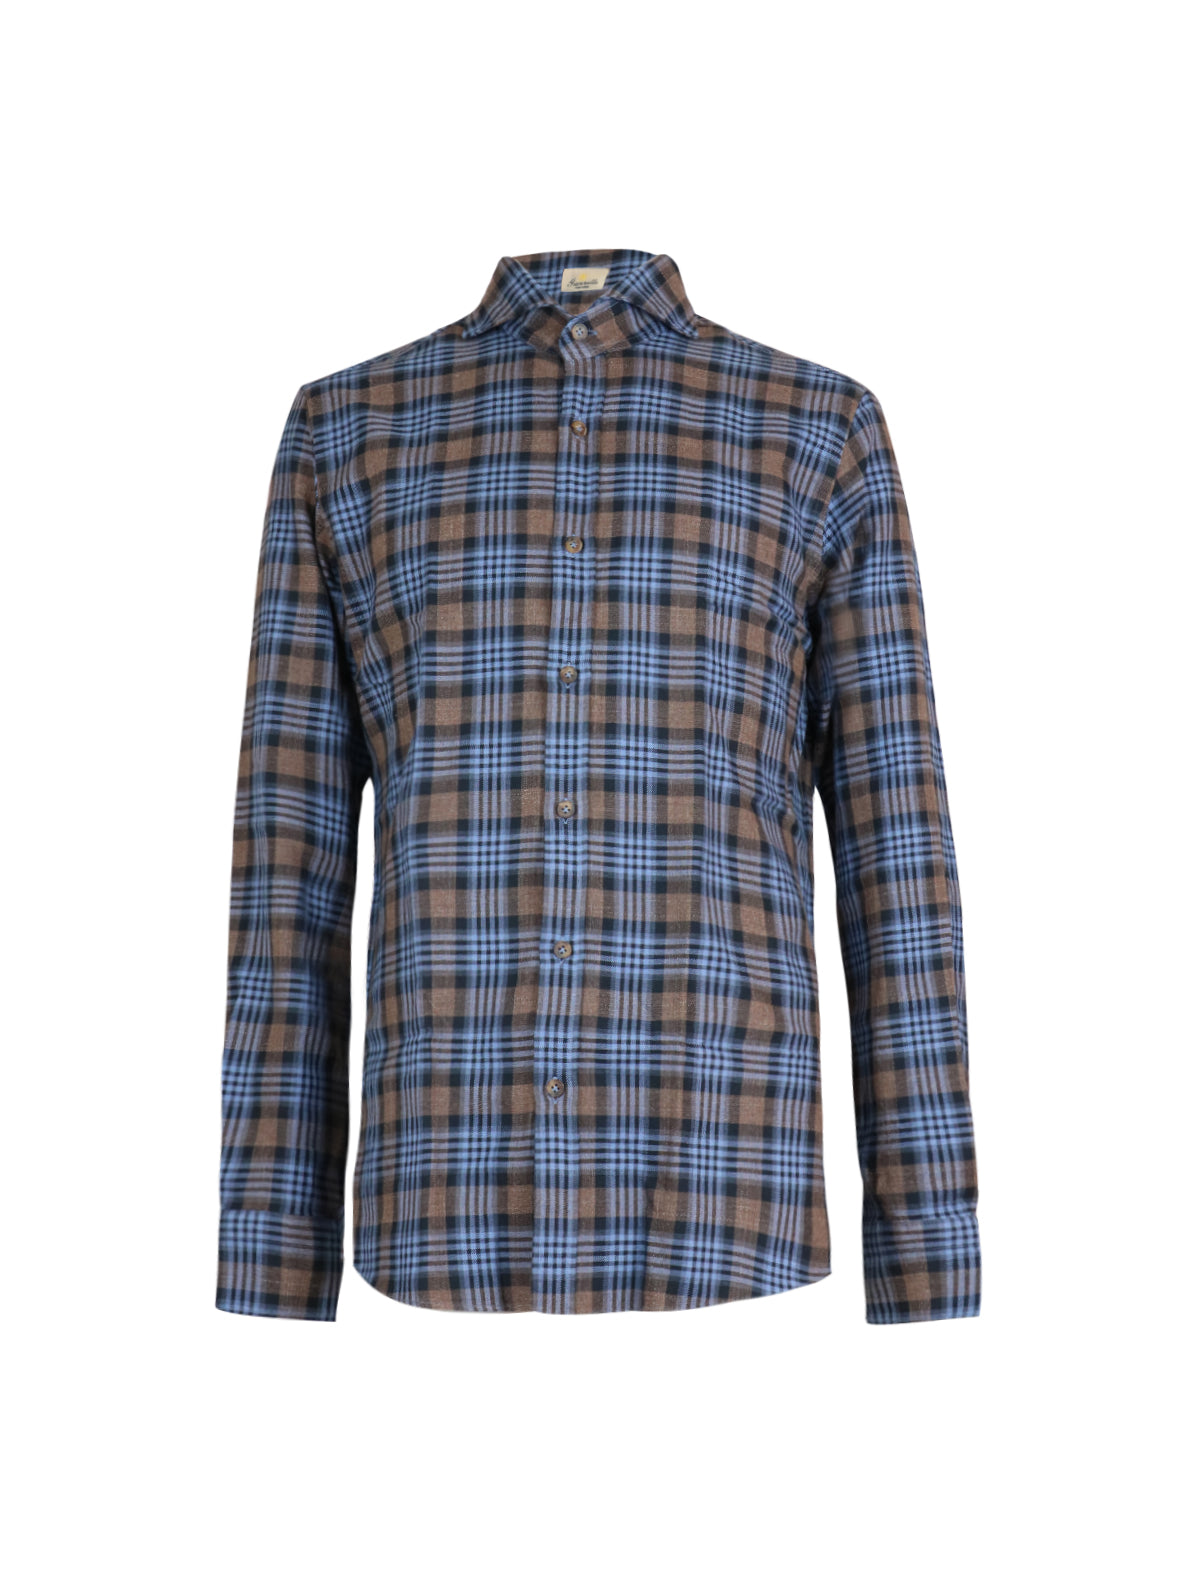 Giannetto Portofino Checked Shirt in Brown/Blue